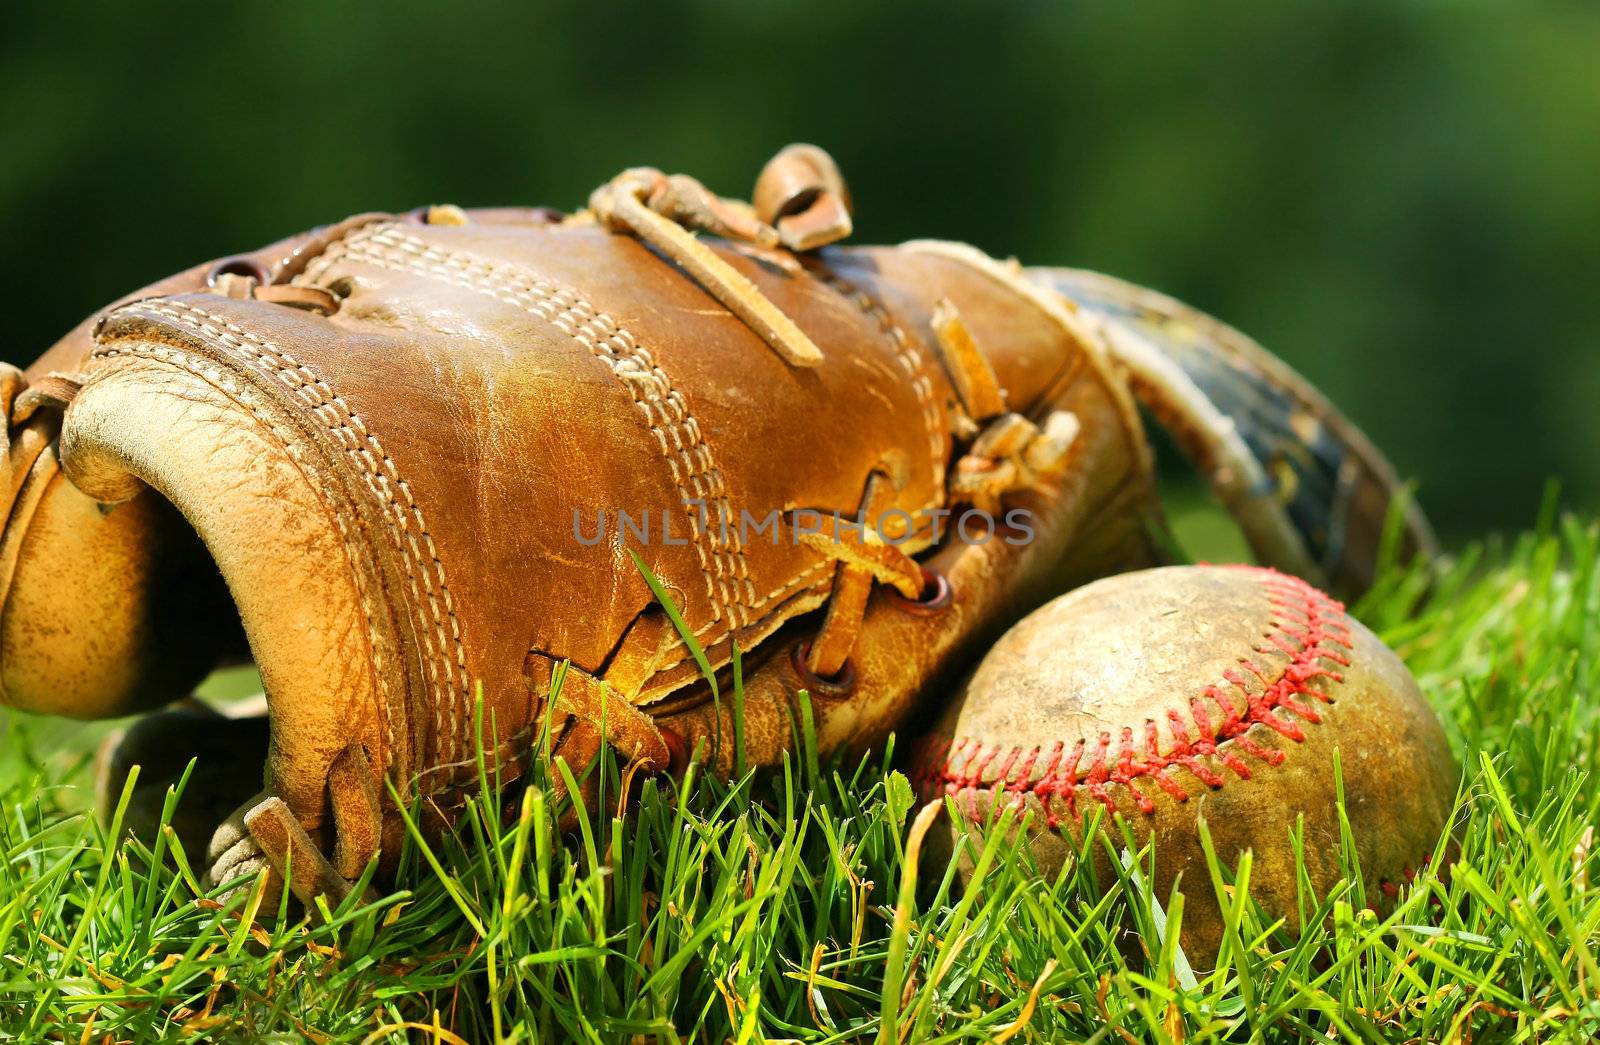 Old glove and baseball